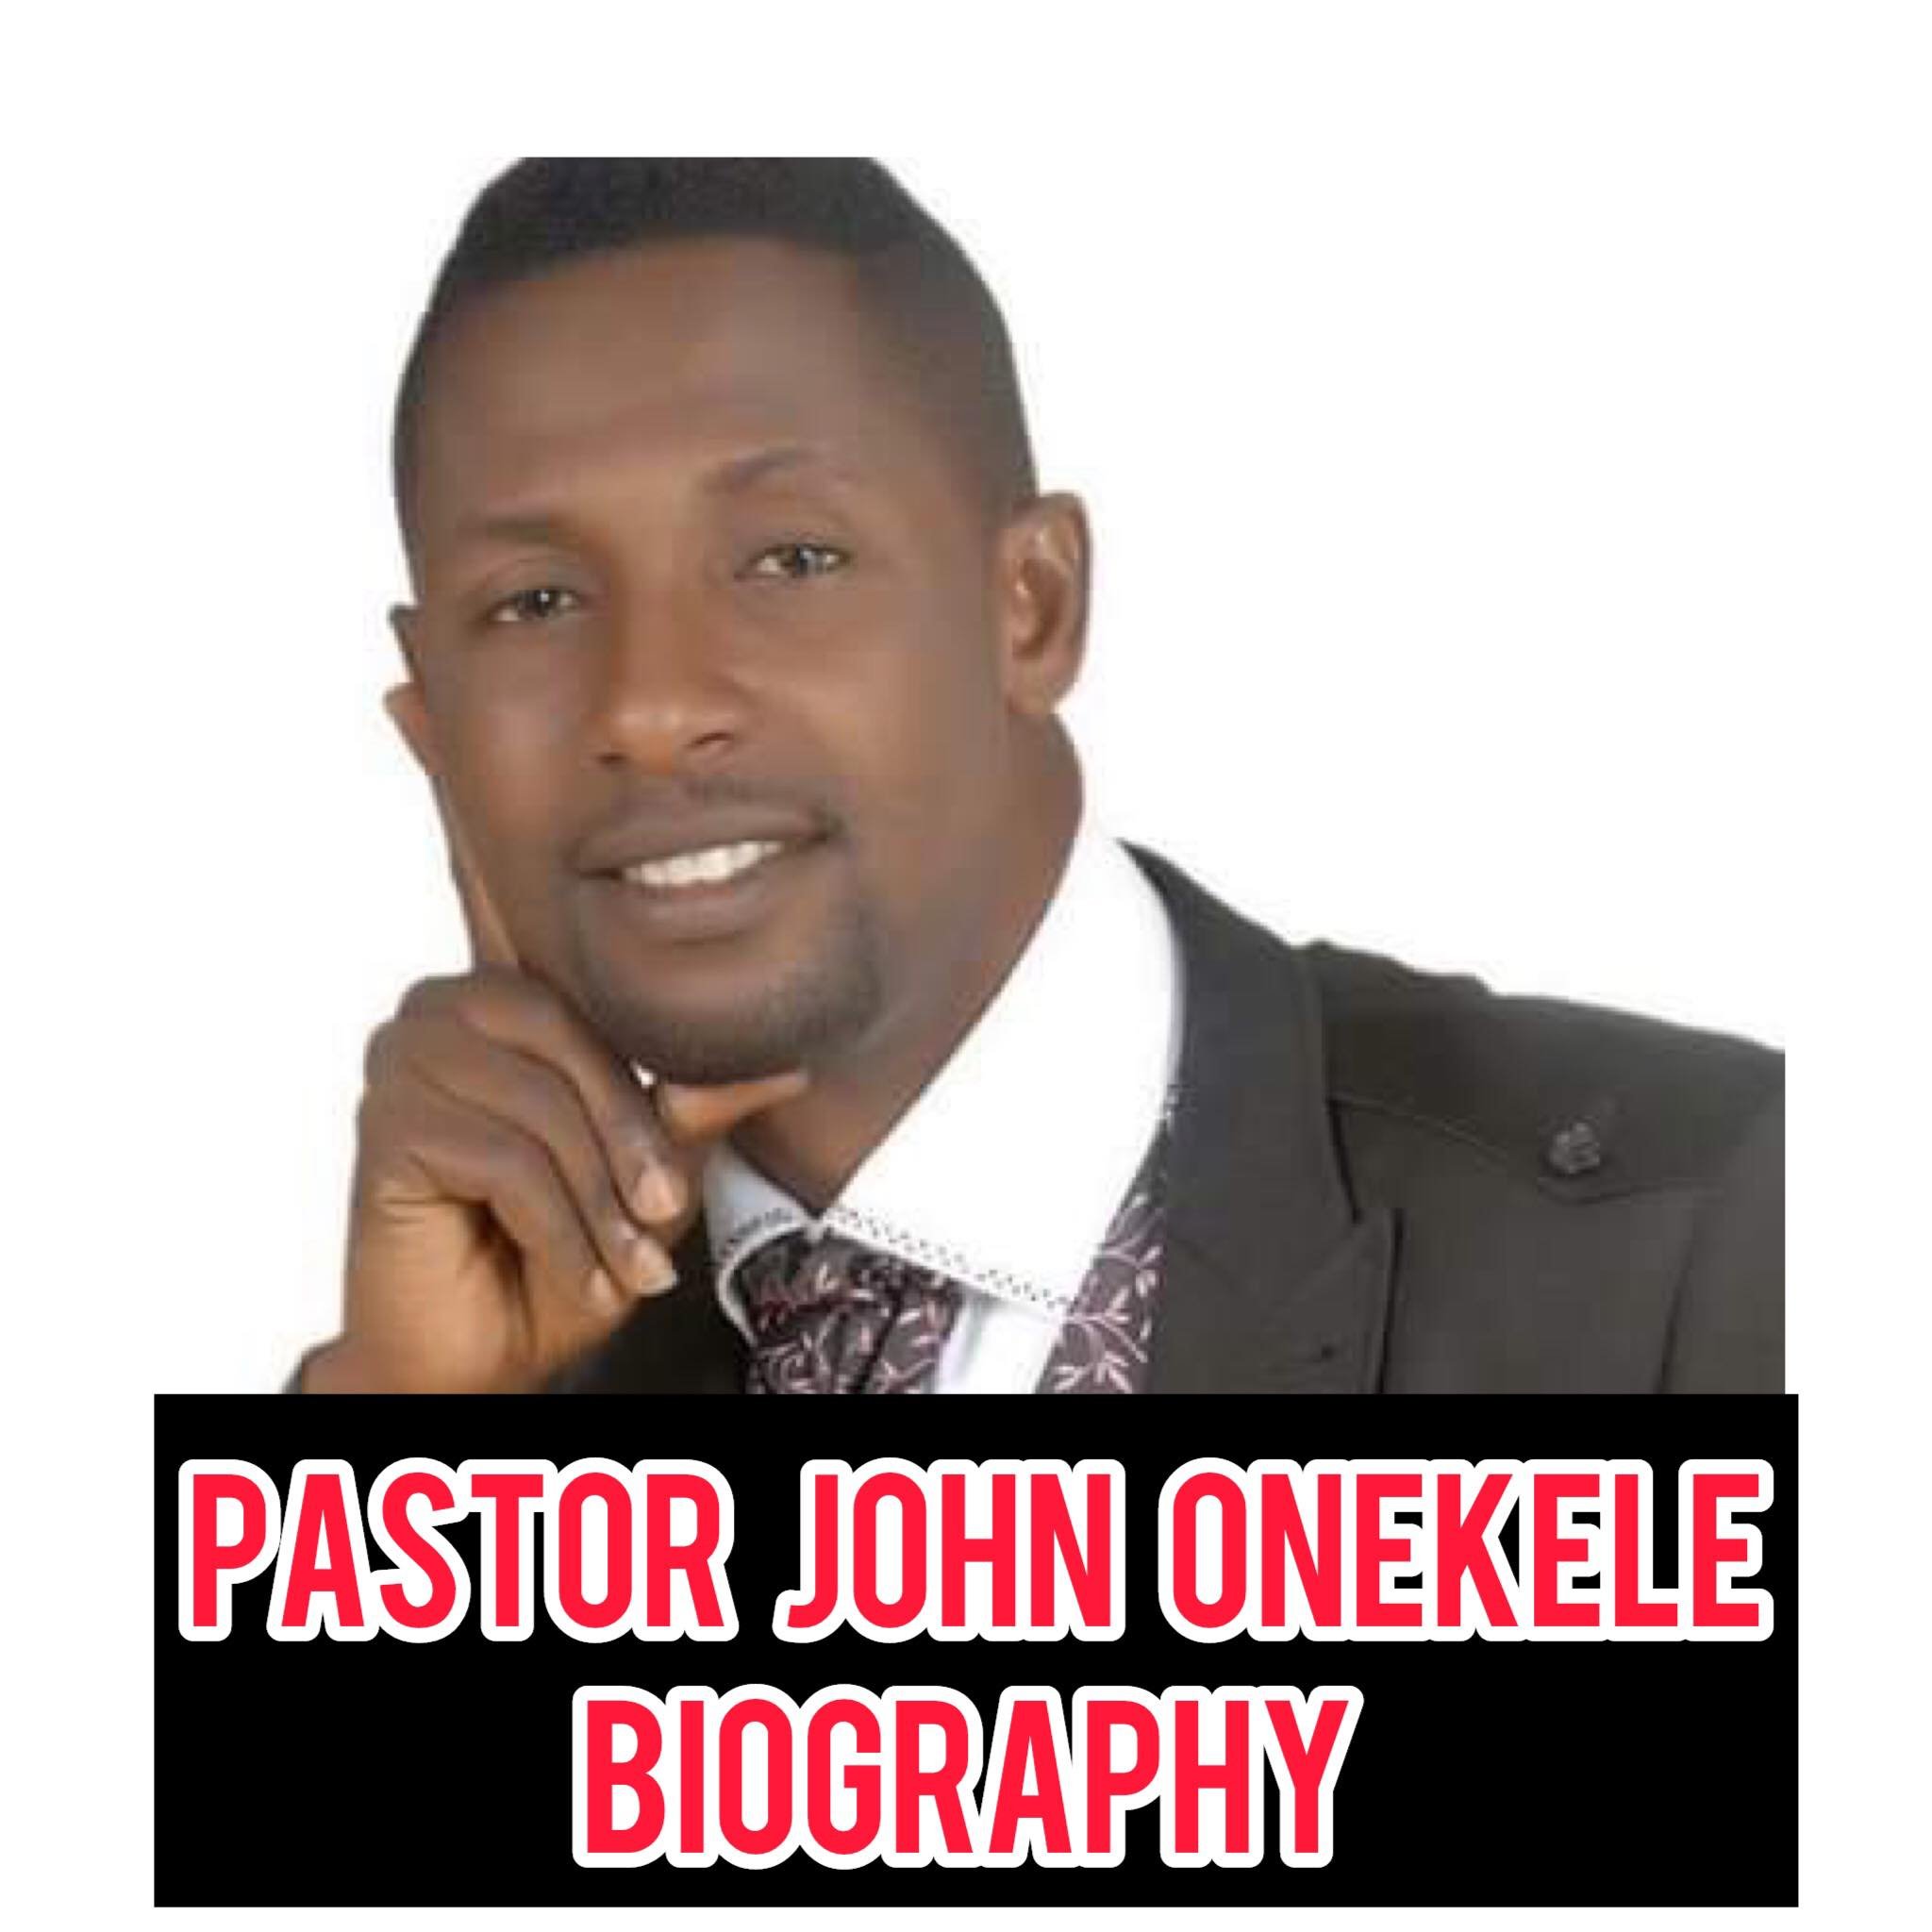 Pastor John Onekele Biography